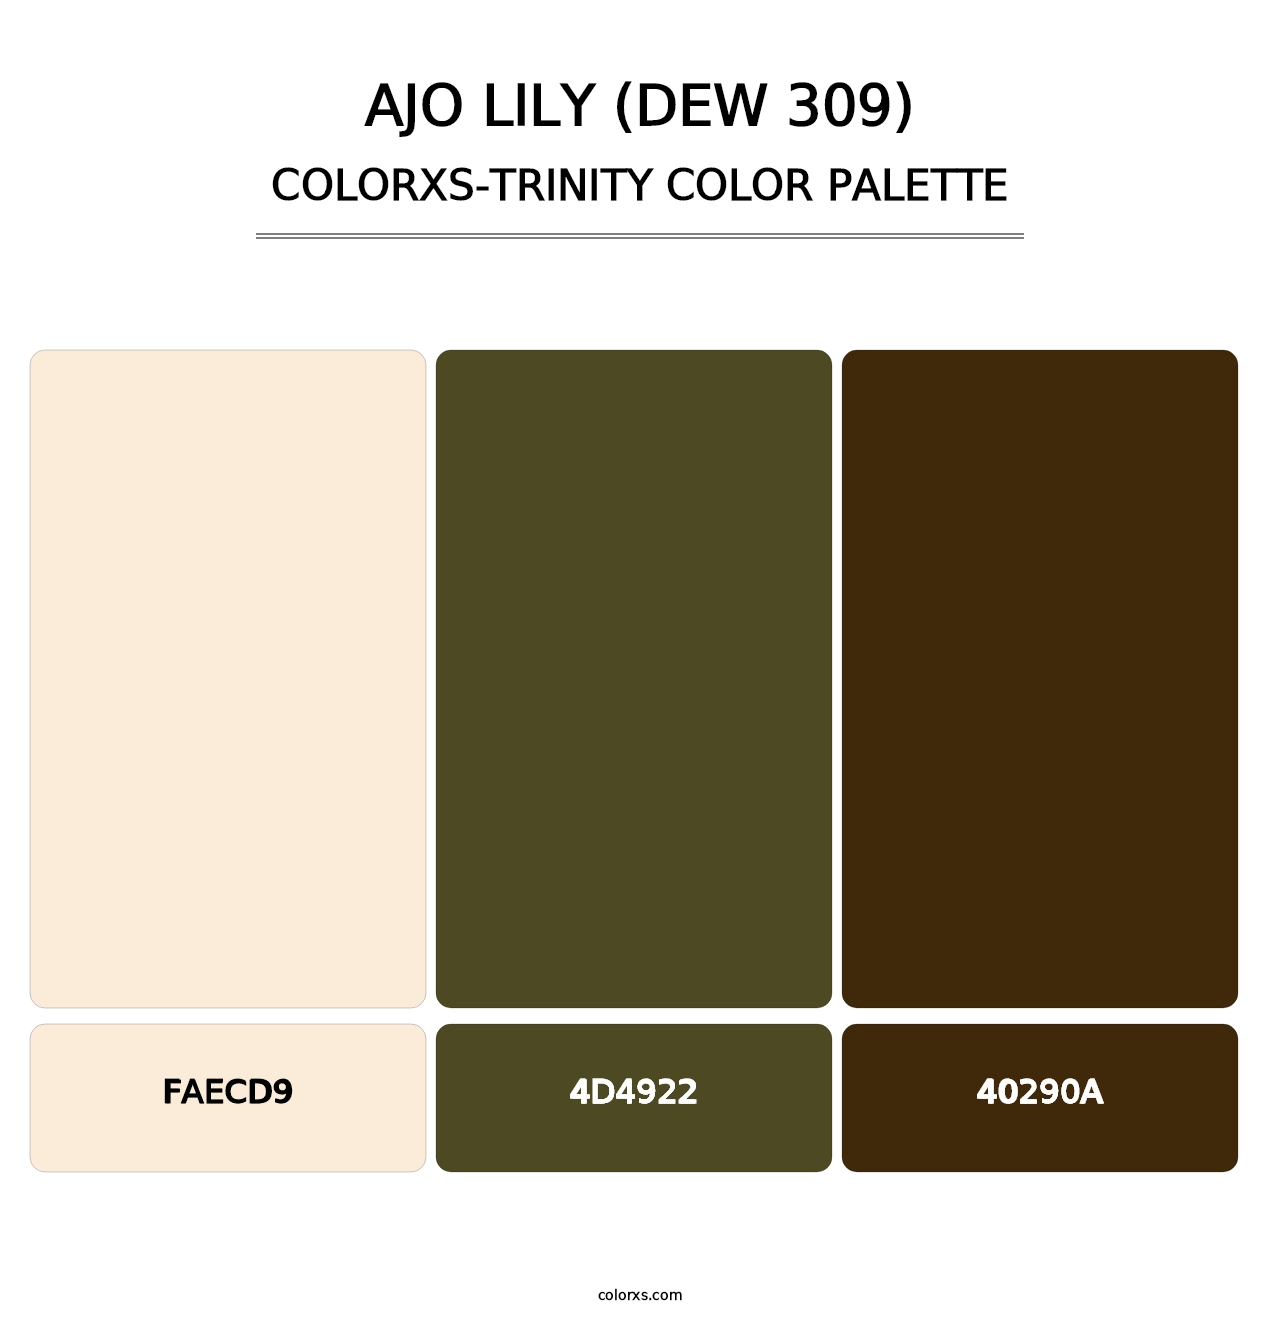 Ajo Lily (DEW 309) - Colorxs Trinity Palette